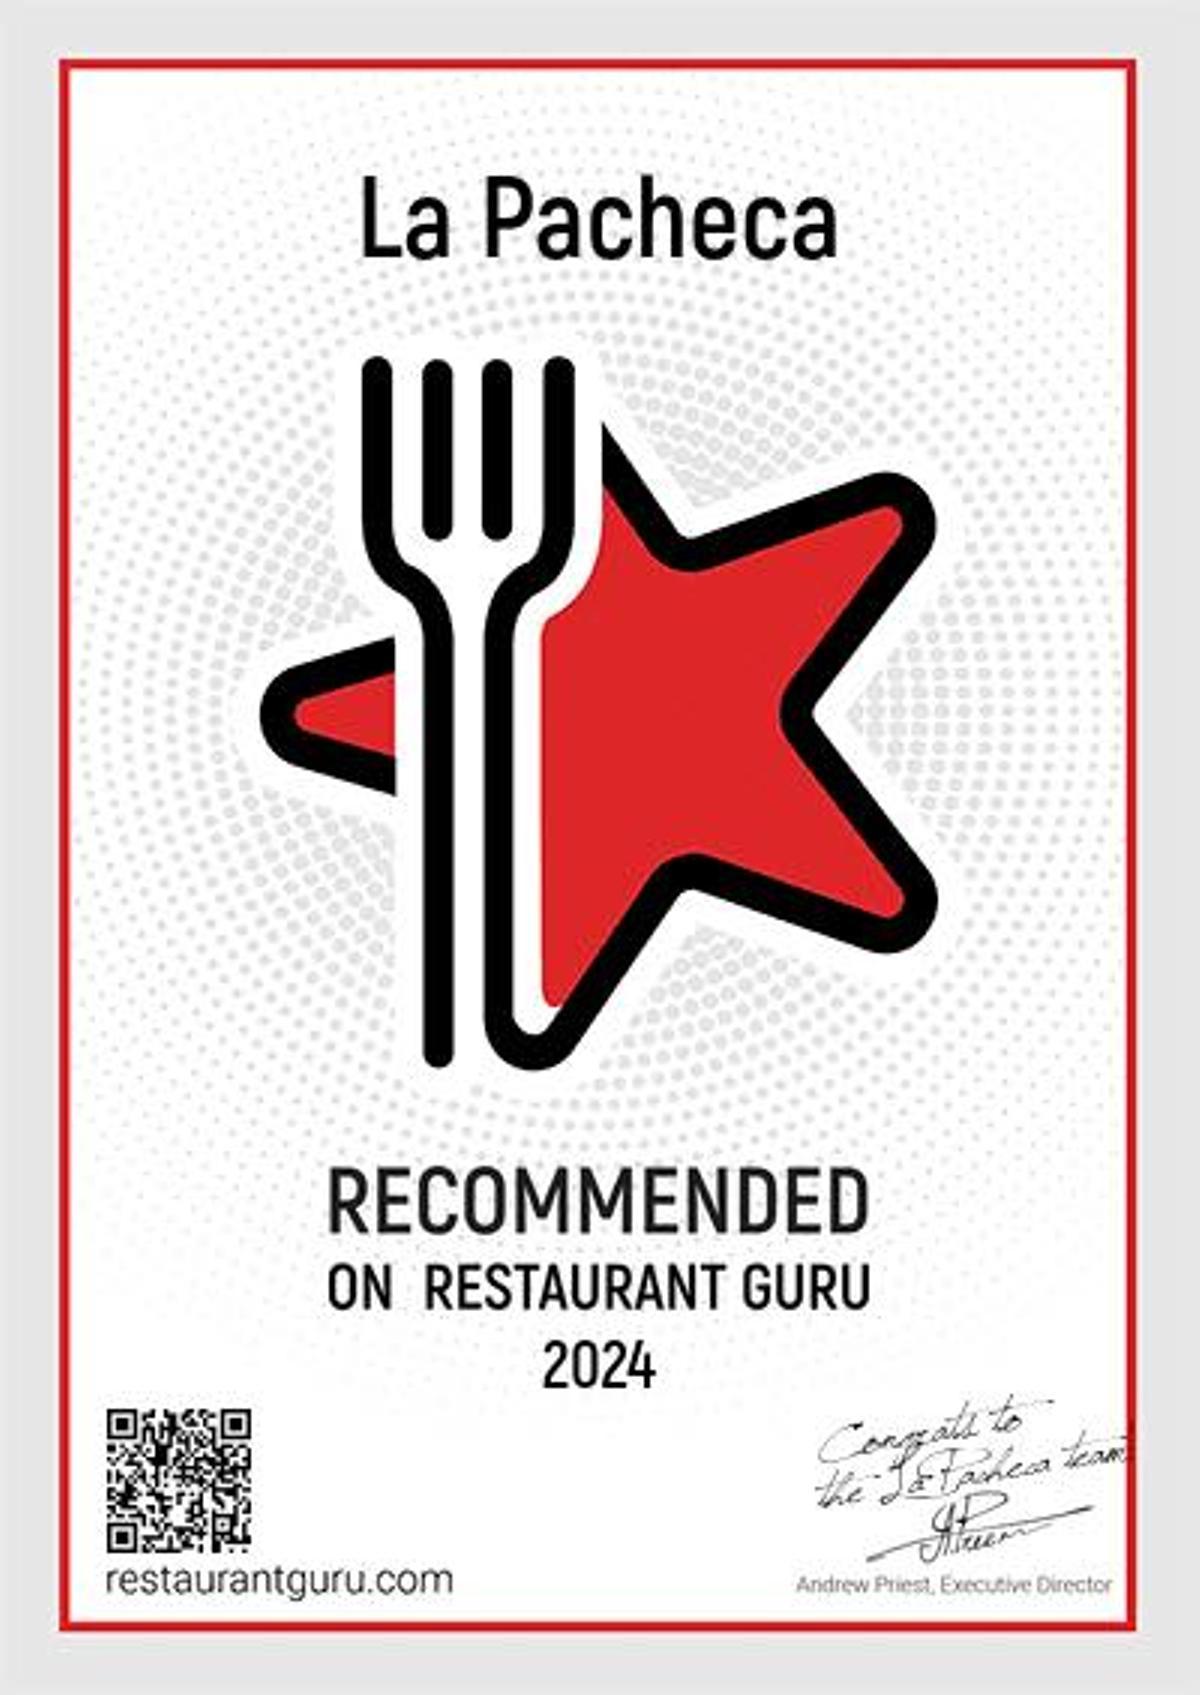 La Pacheca, recomendada por Restaurant Guru 2024.